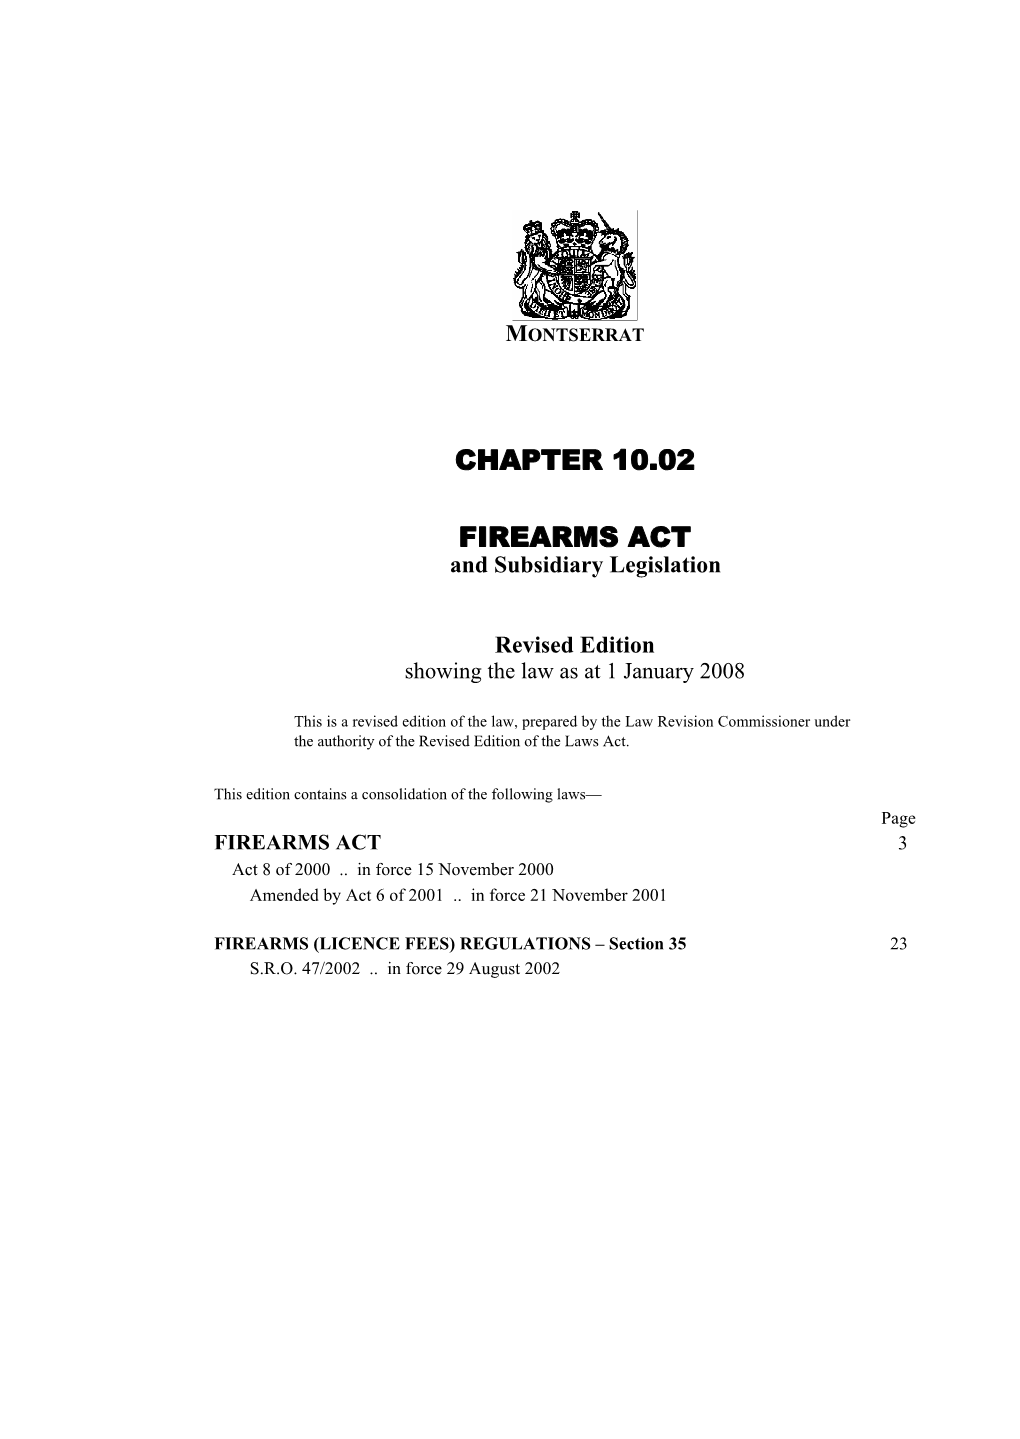 FIREARMS ACT and Subsidiary Legislation